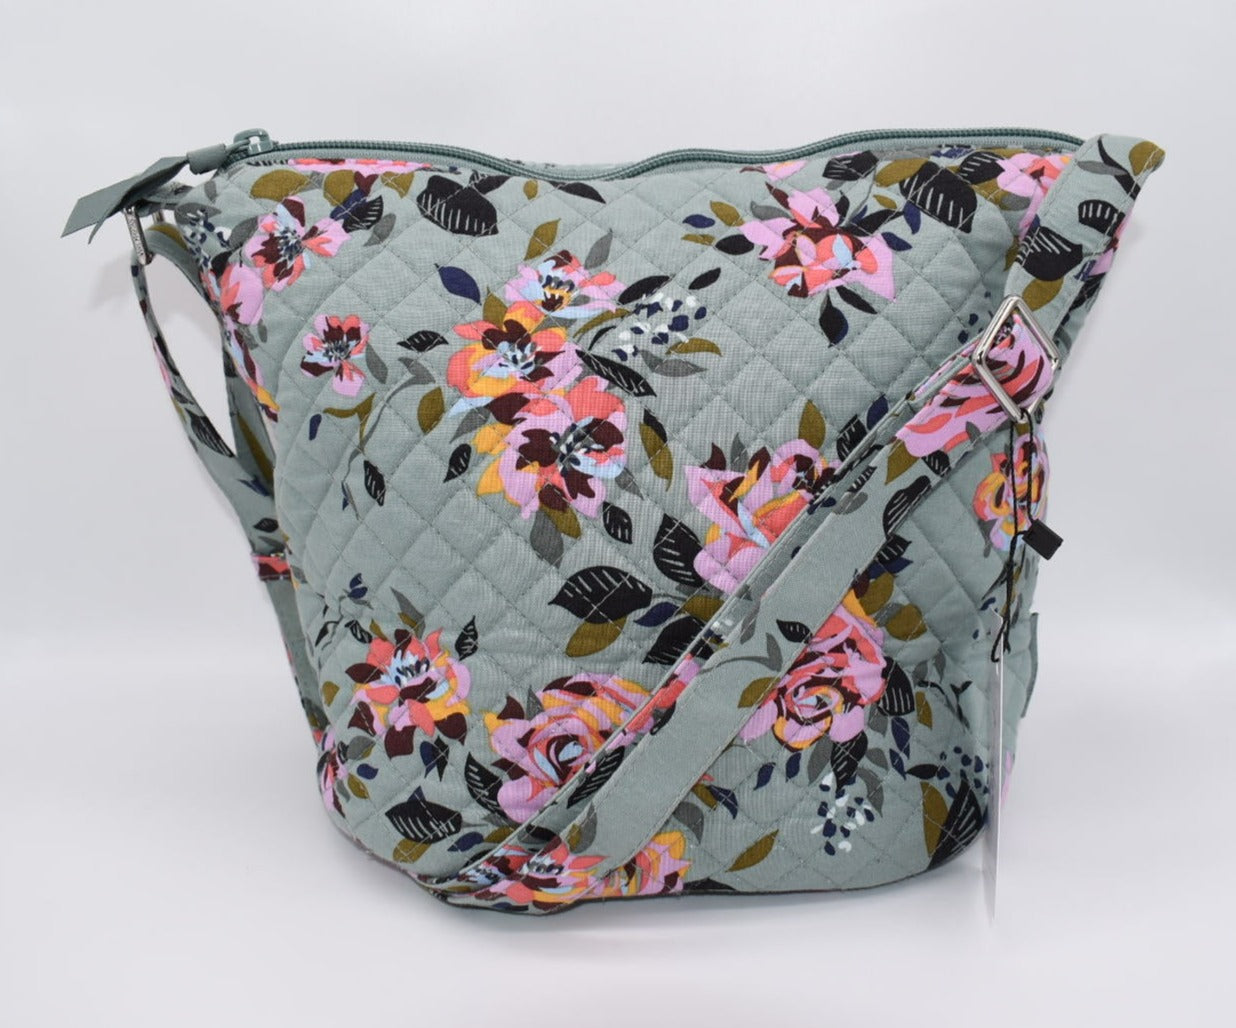 Vera Bradley Bucket Crossbody Bag in "Rosy Outlook" Pattern